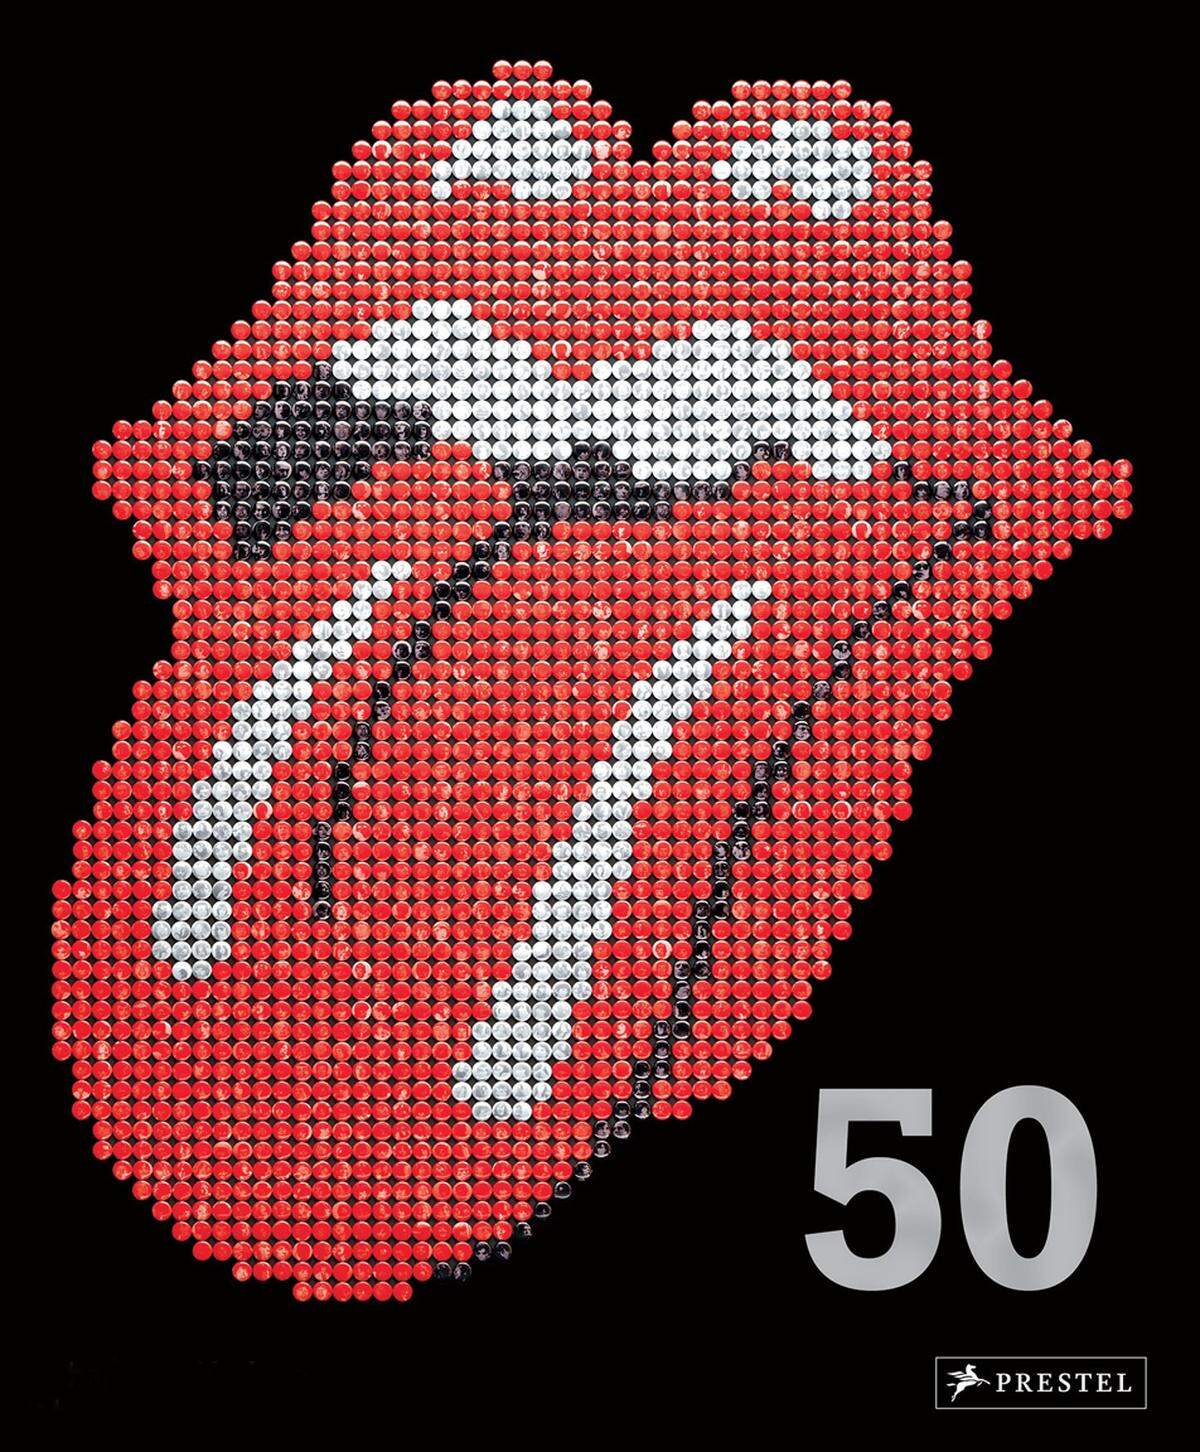 Mick Jagger, Keith Richards, Charlie Watts, Ron Wood: The Rolling Stones: 50, Prestel Verlag